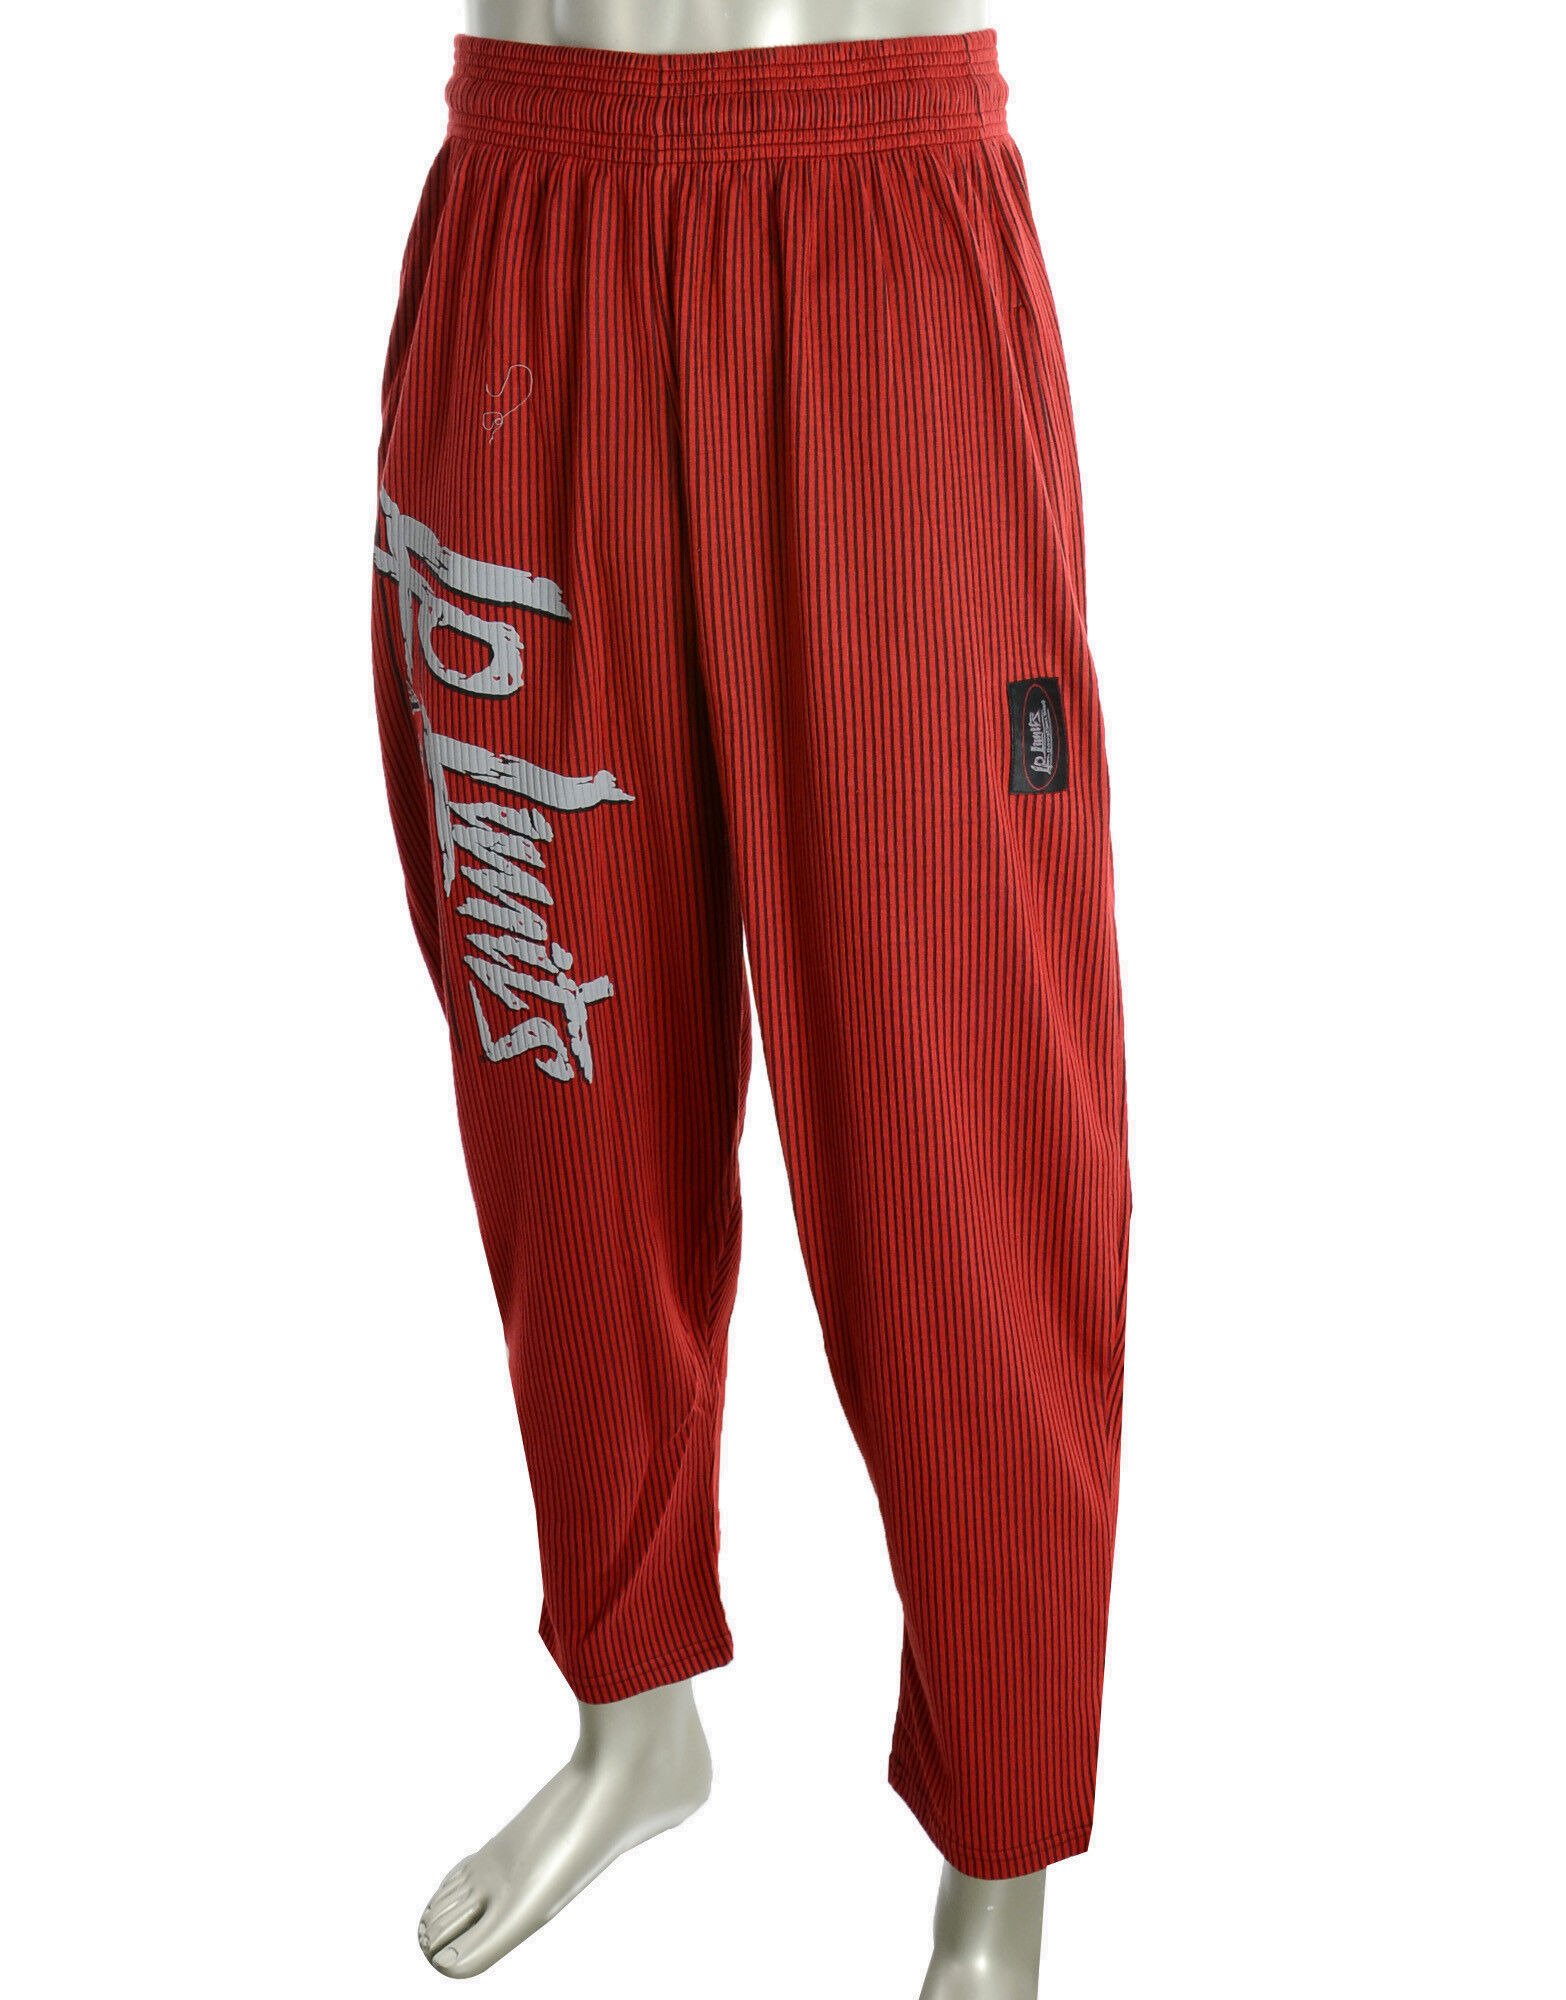 LEGAL POWER Bodypants Boston Colore: Rosso Xl